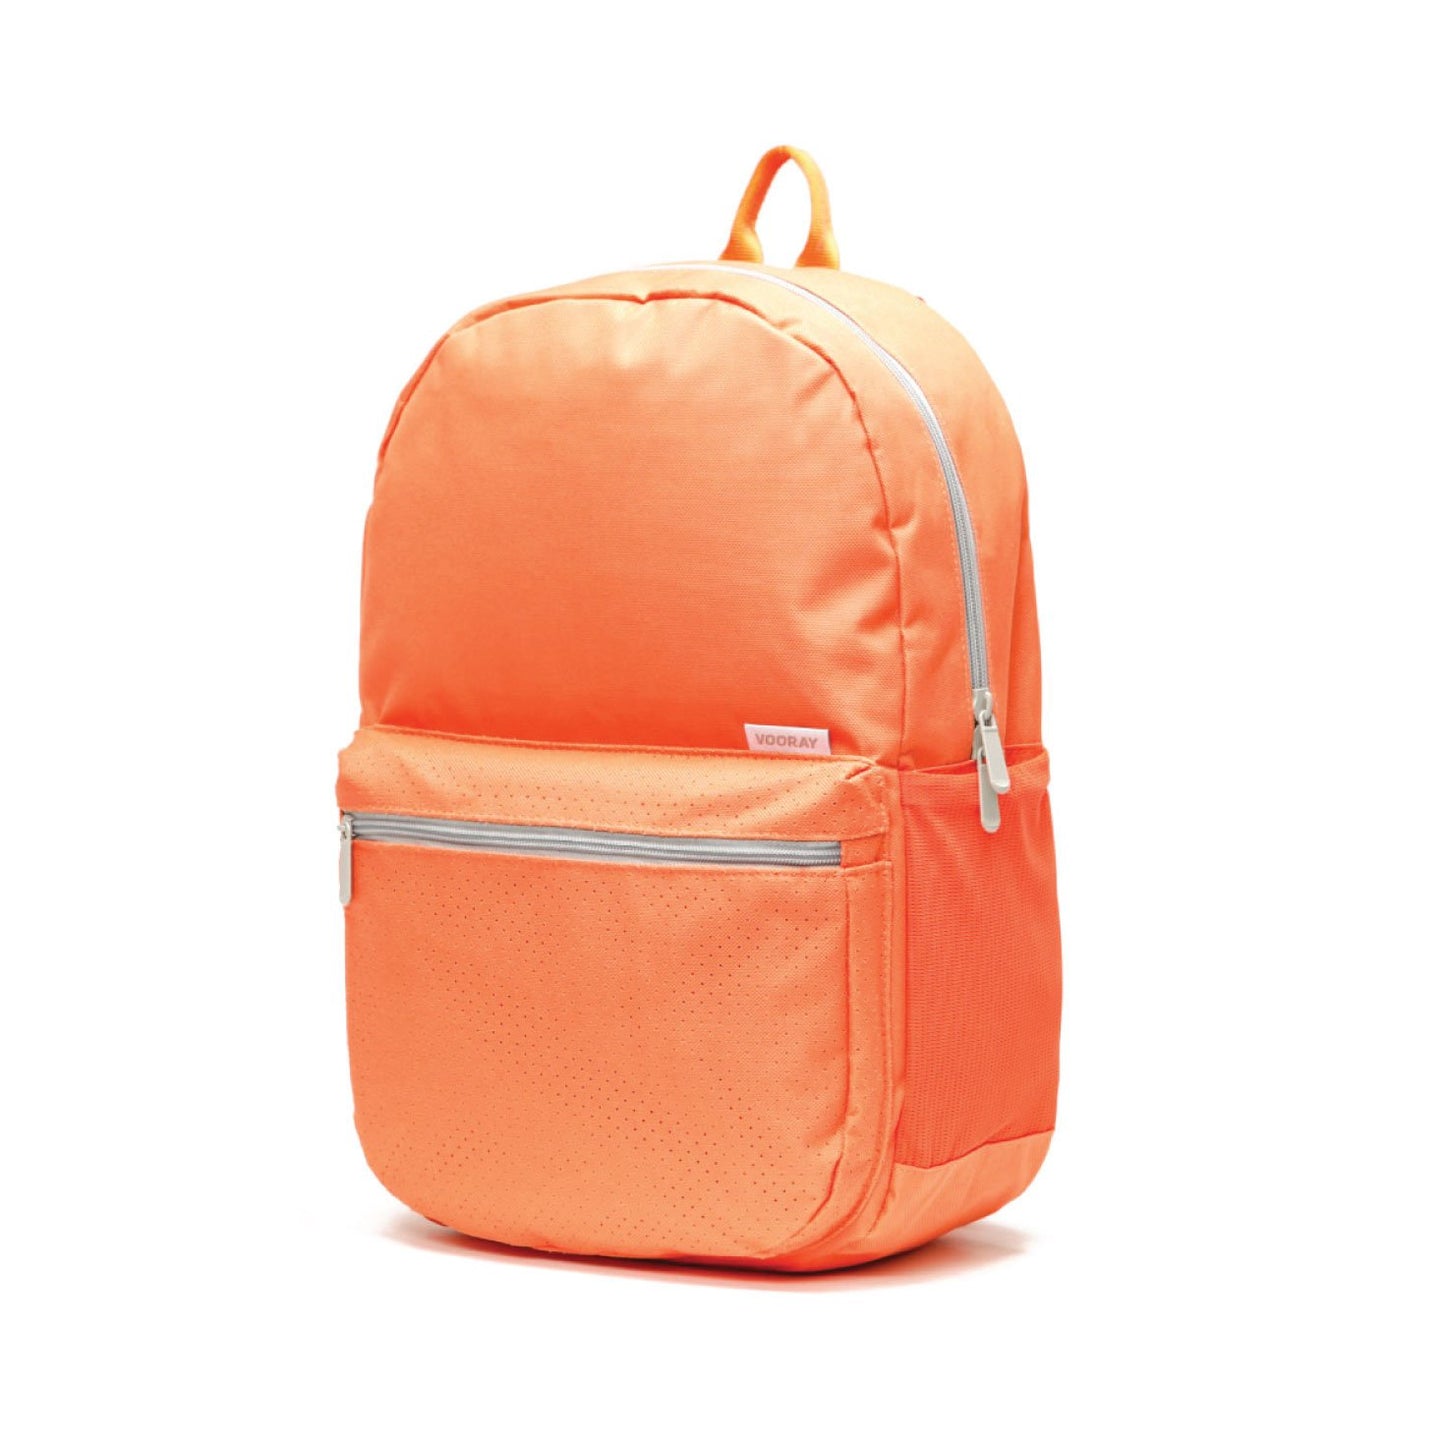 ACE Backpack - Blaze Orange